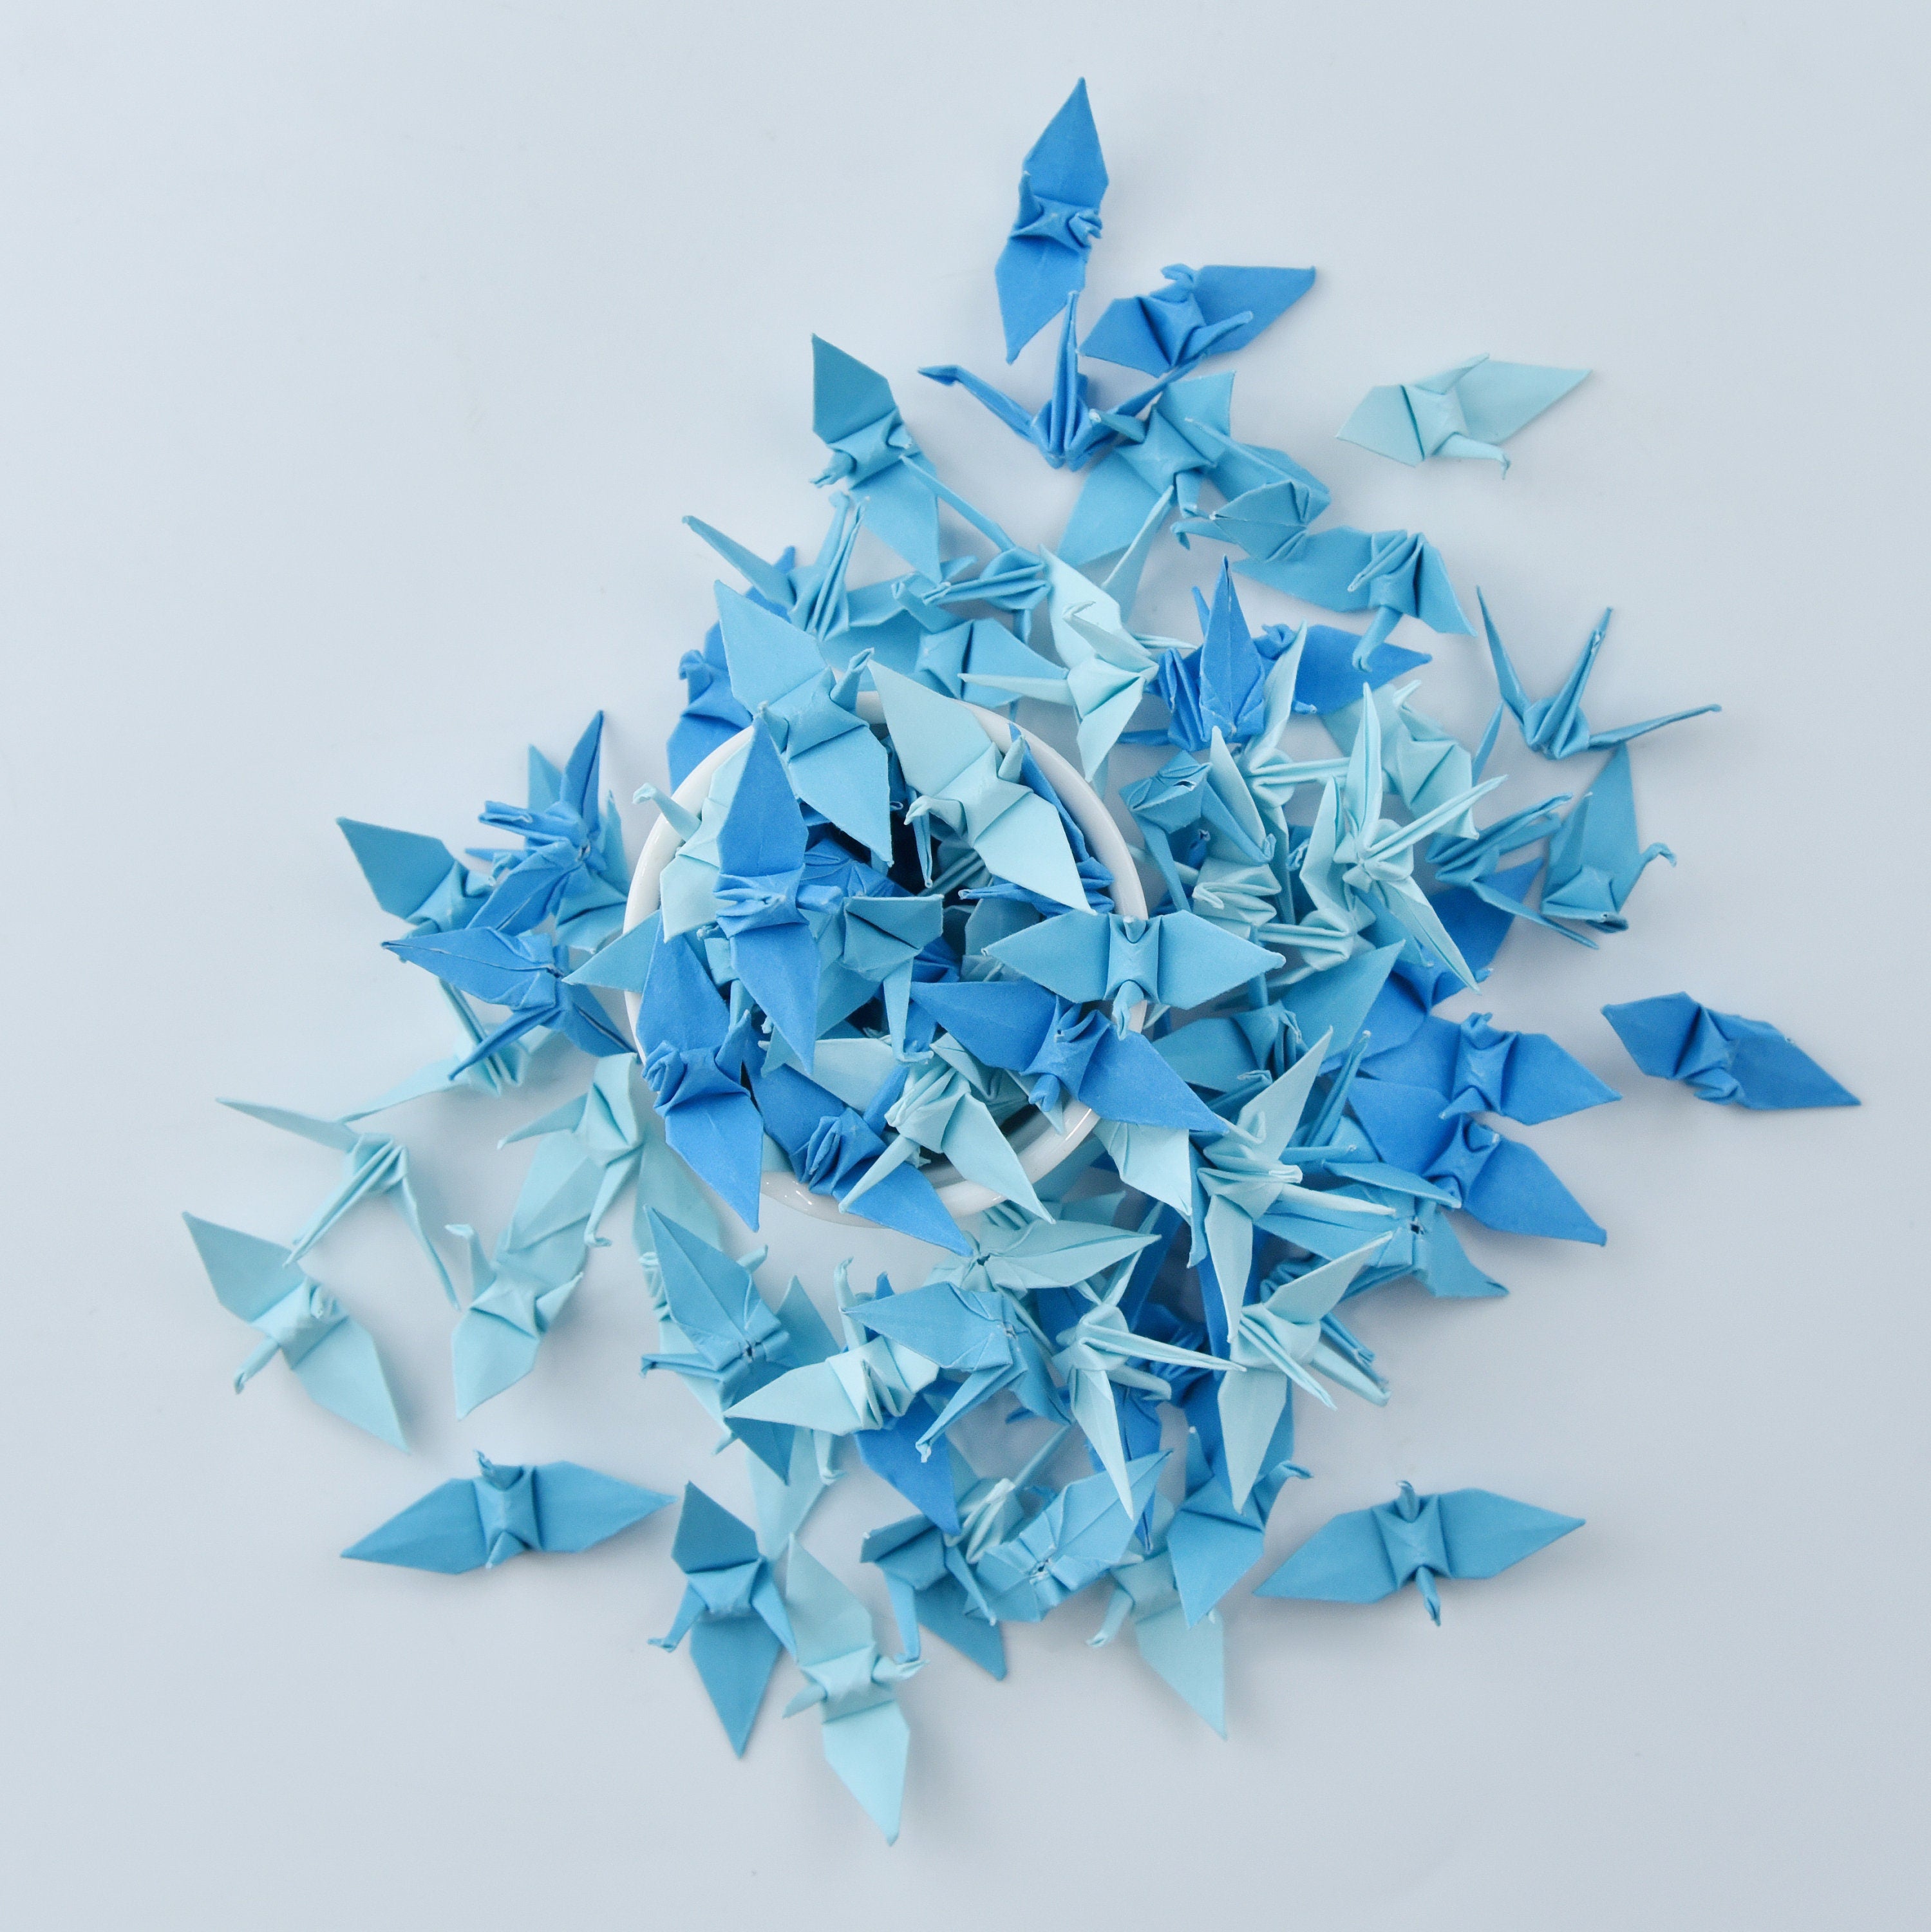 100 Blue Shade Origami Paper Cranes Small 1.5x1.5 inch Origami cranes Folded - Wedding Gift, Decor, Wedding Backdrop